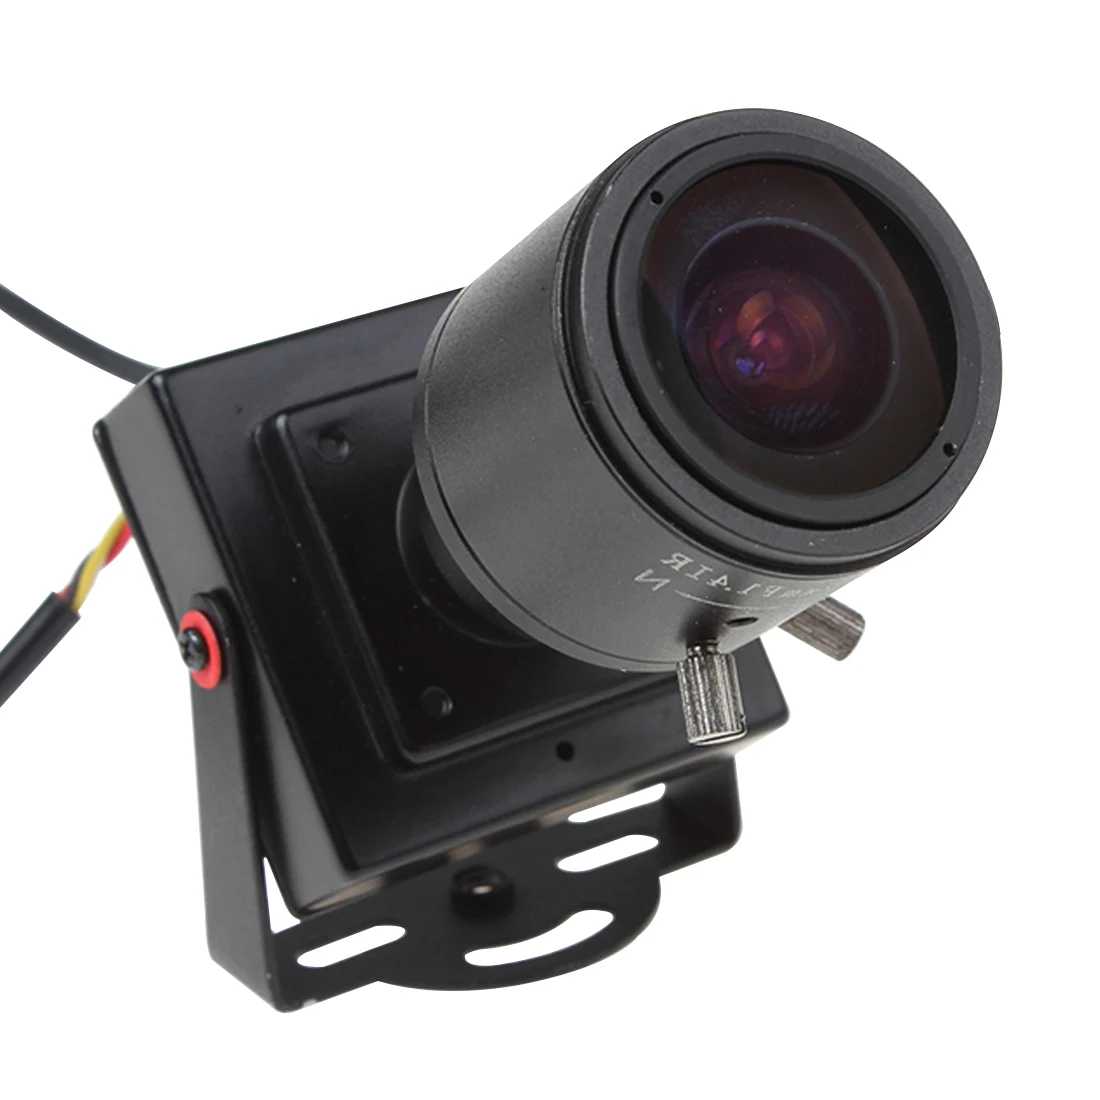 

2.8-12mm Manual Lens Mini HD 700TVL 1/3 CMOS Security Audio Video Color CCTV Camera PAL NTSC for Home indoor Outdoor